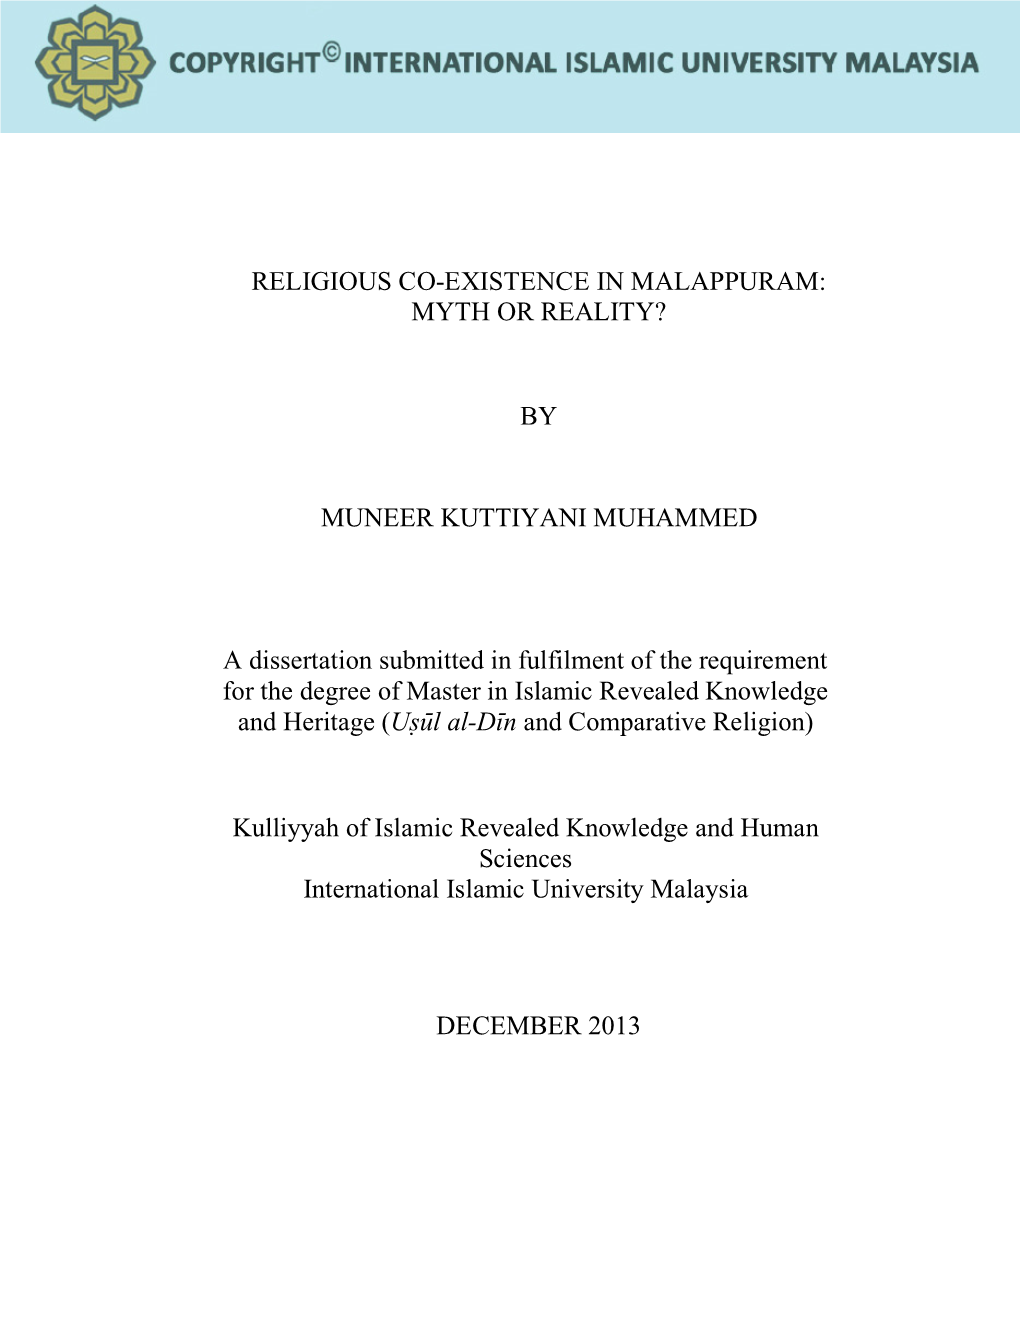 BY MUNEER KUTTIYANI MUHAMMED a Dissertation